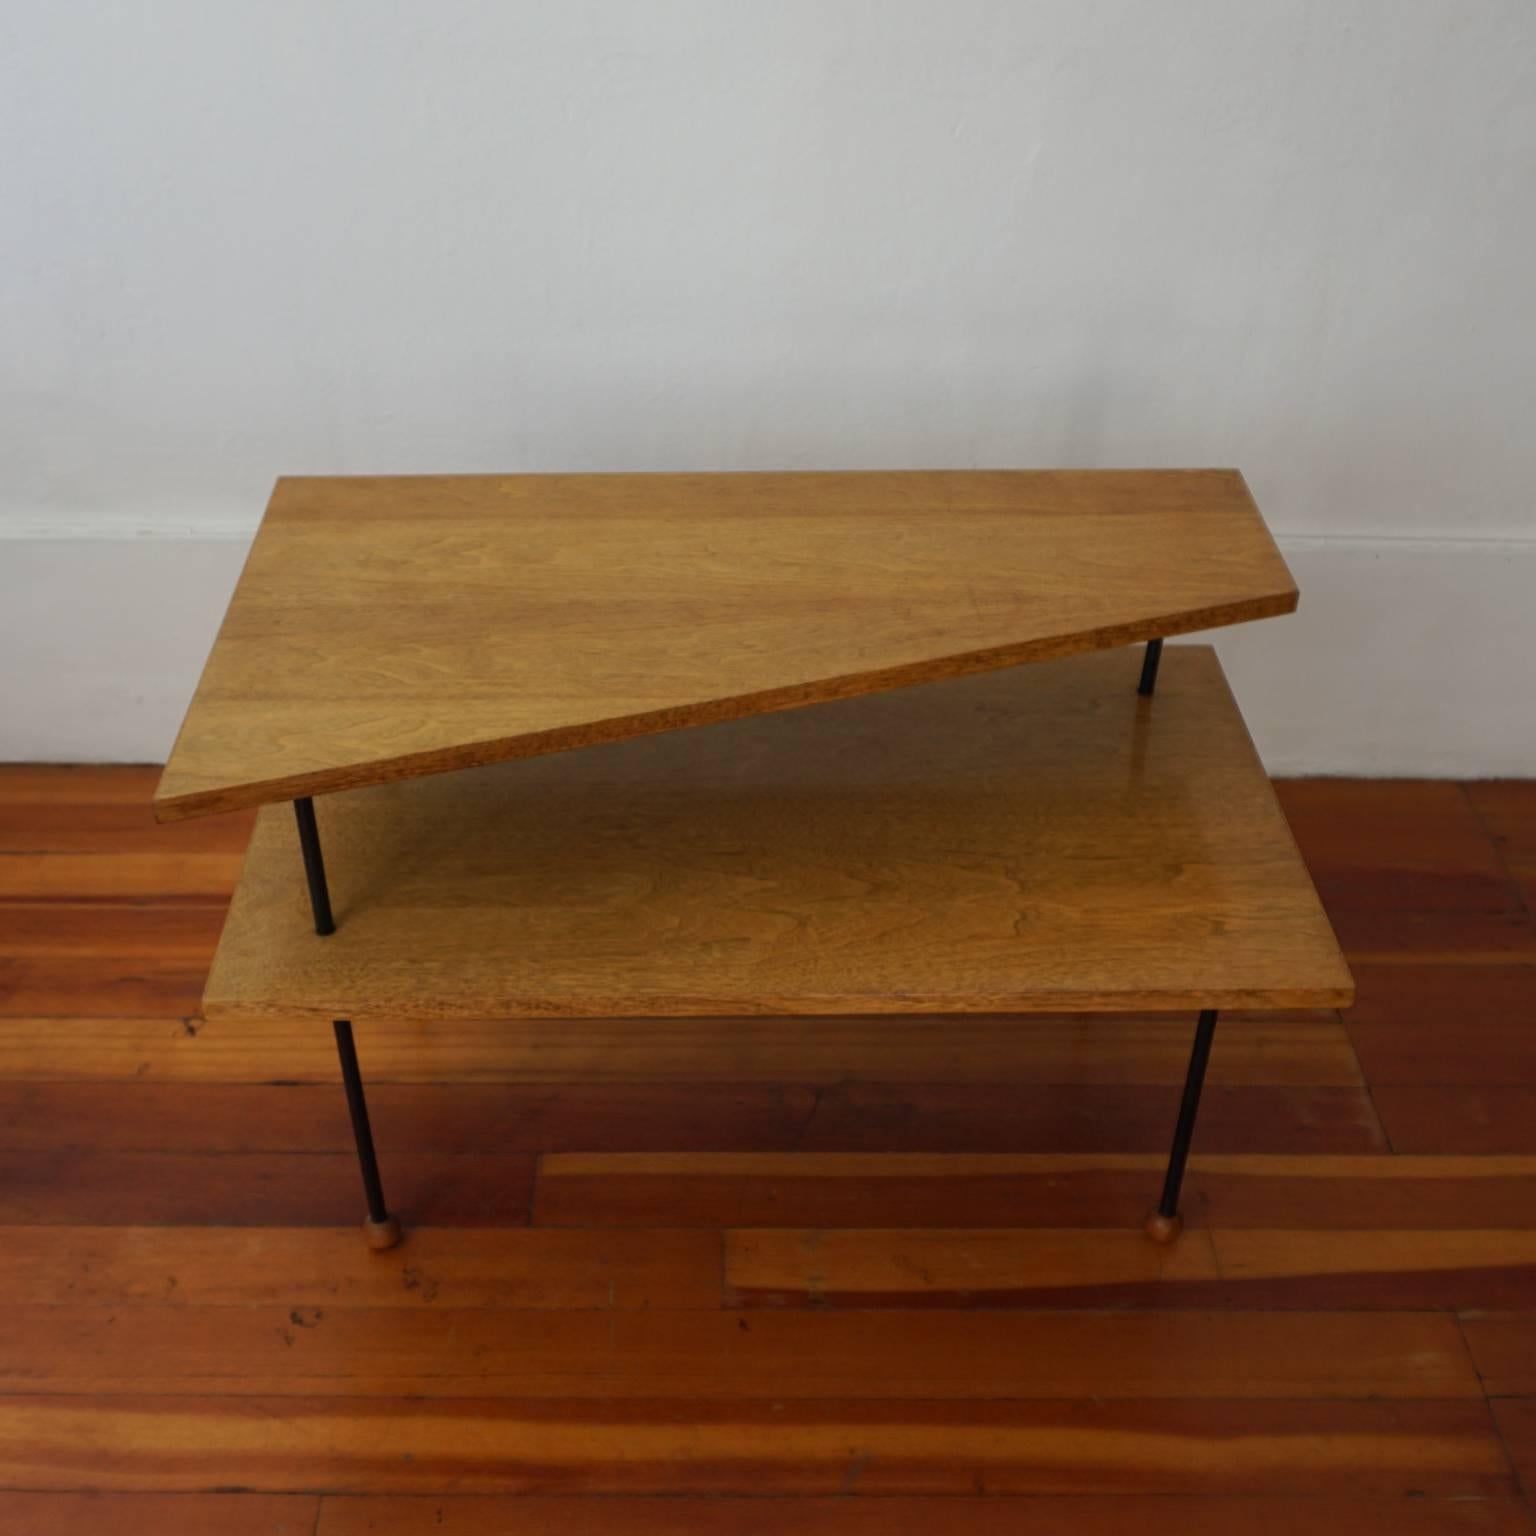 Asymmetrical two-tier occasional table with iron legs and ball feet. Designed by Swedish-born California designer, Greta Grossman, 1952.